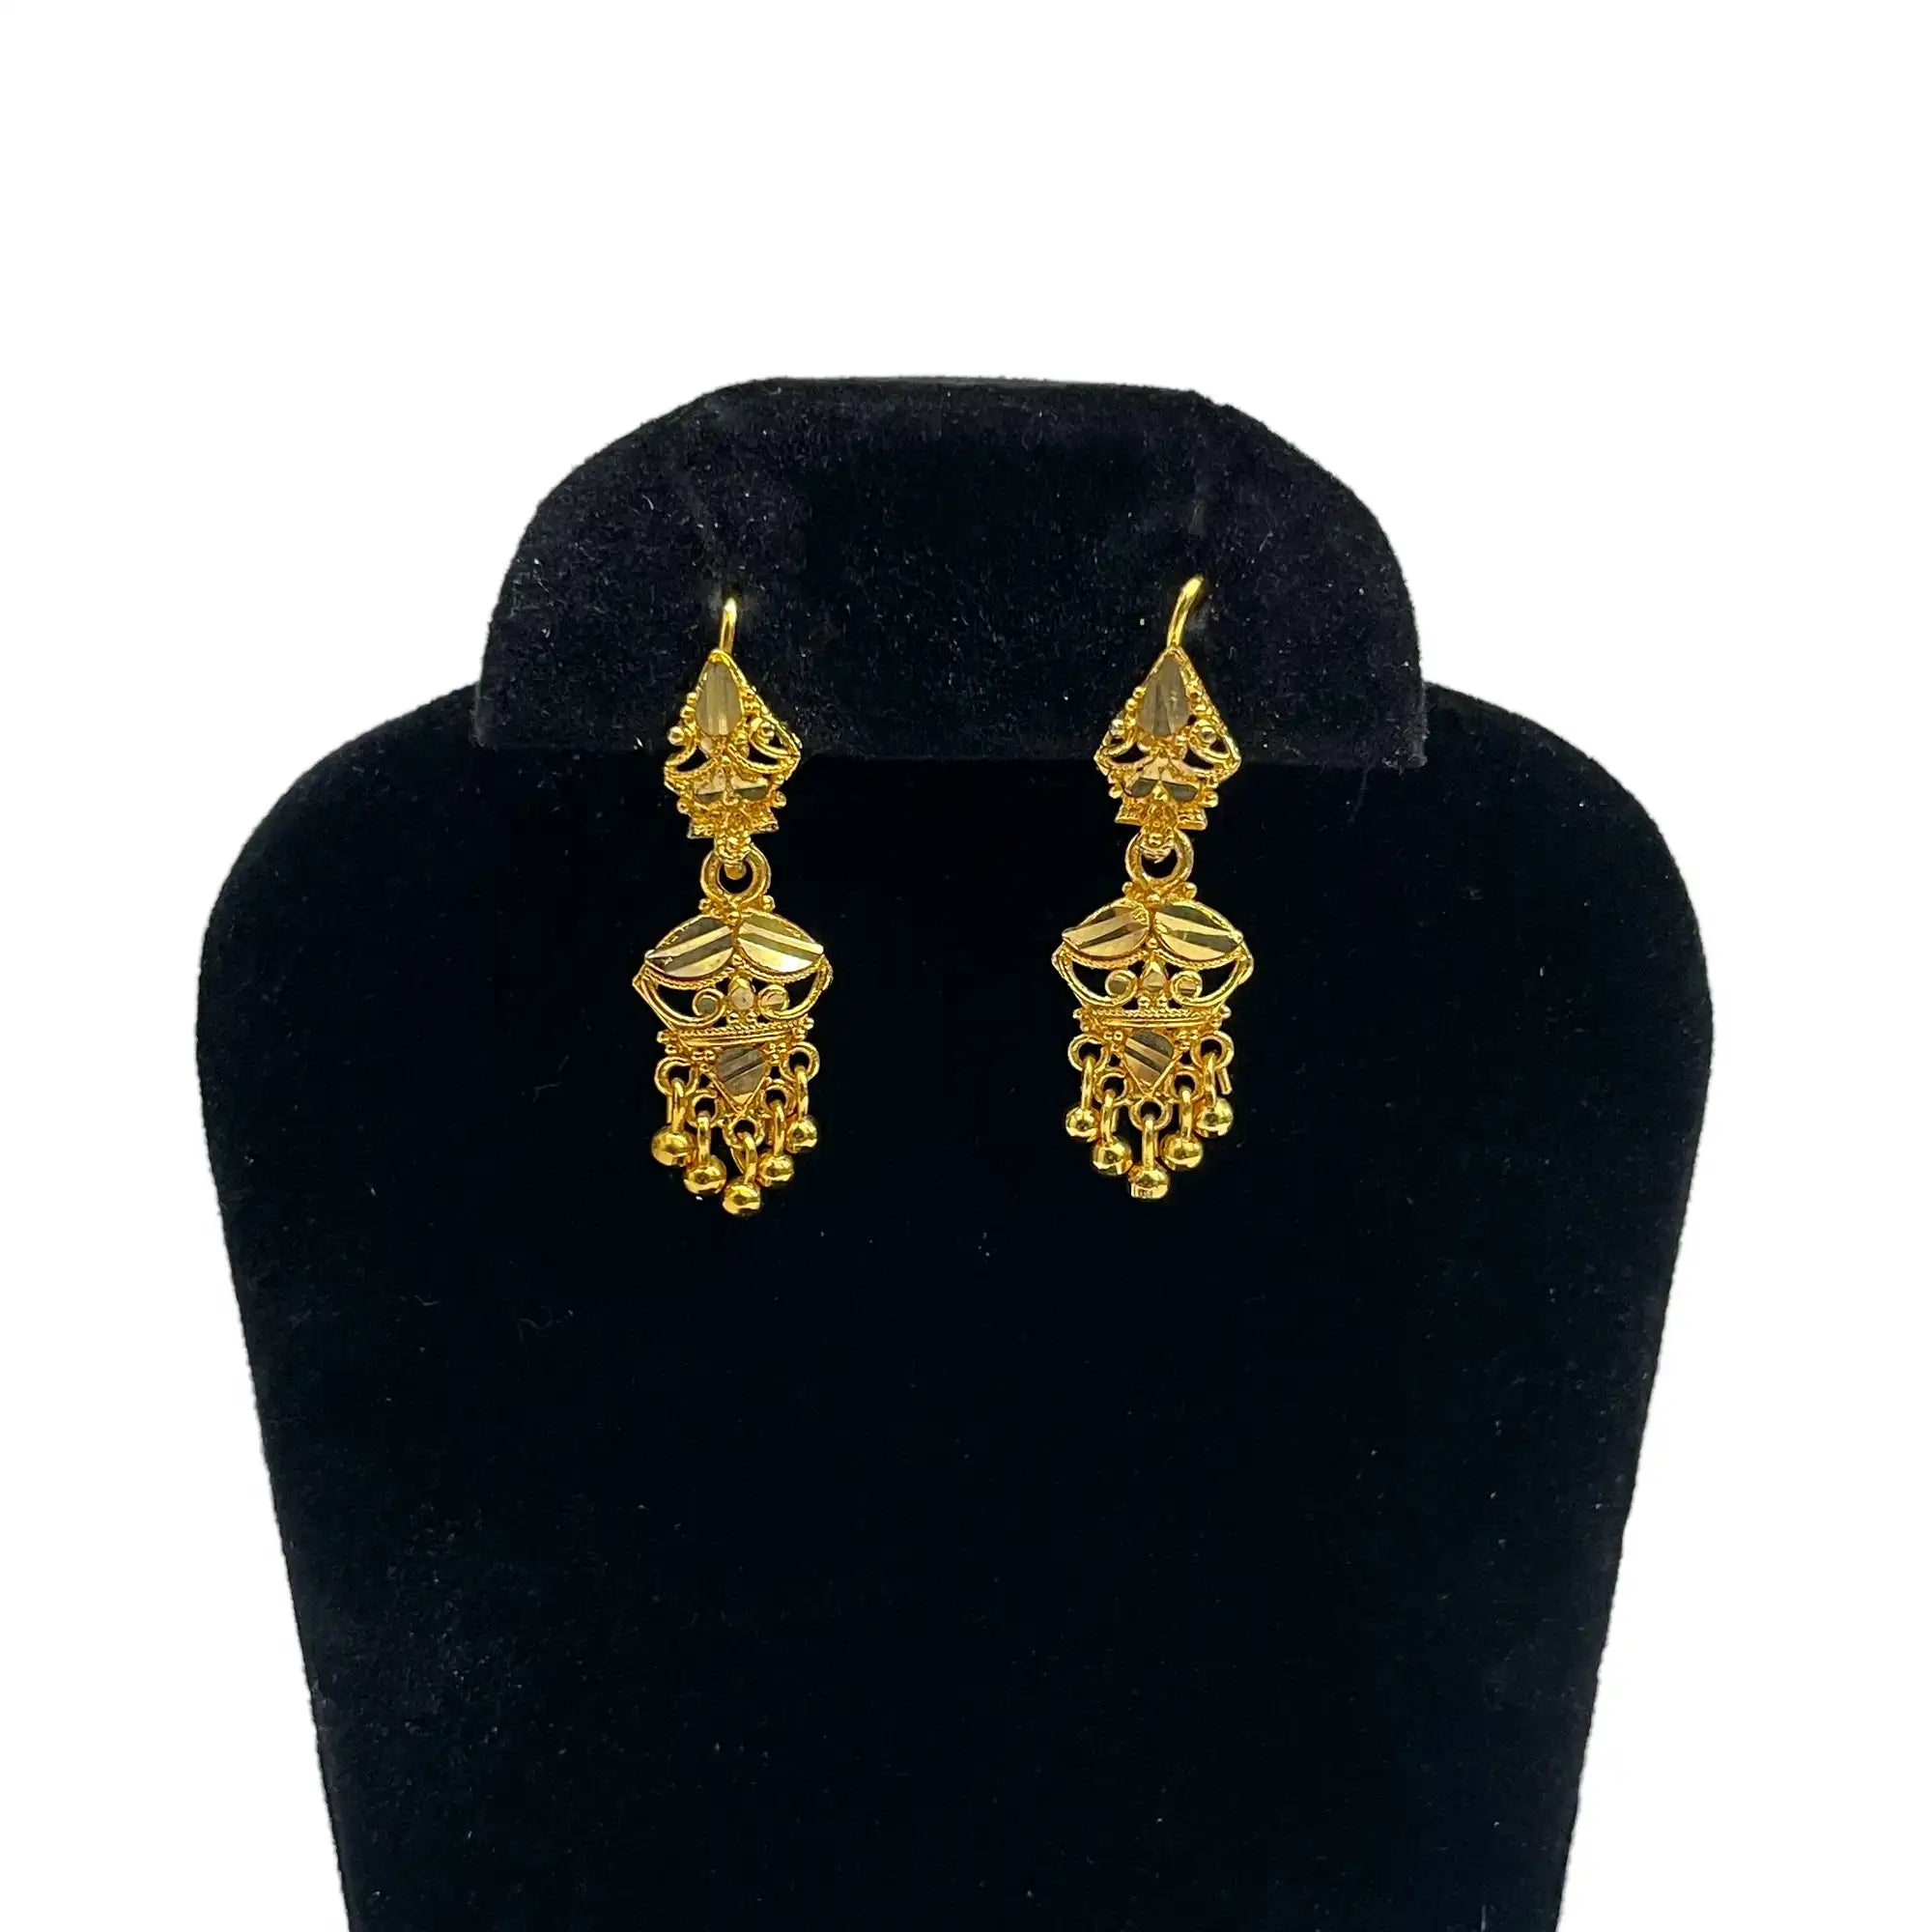 unique gold earrings, gold plated earrings, tradistional earrings